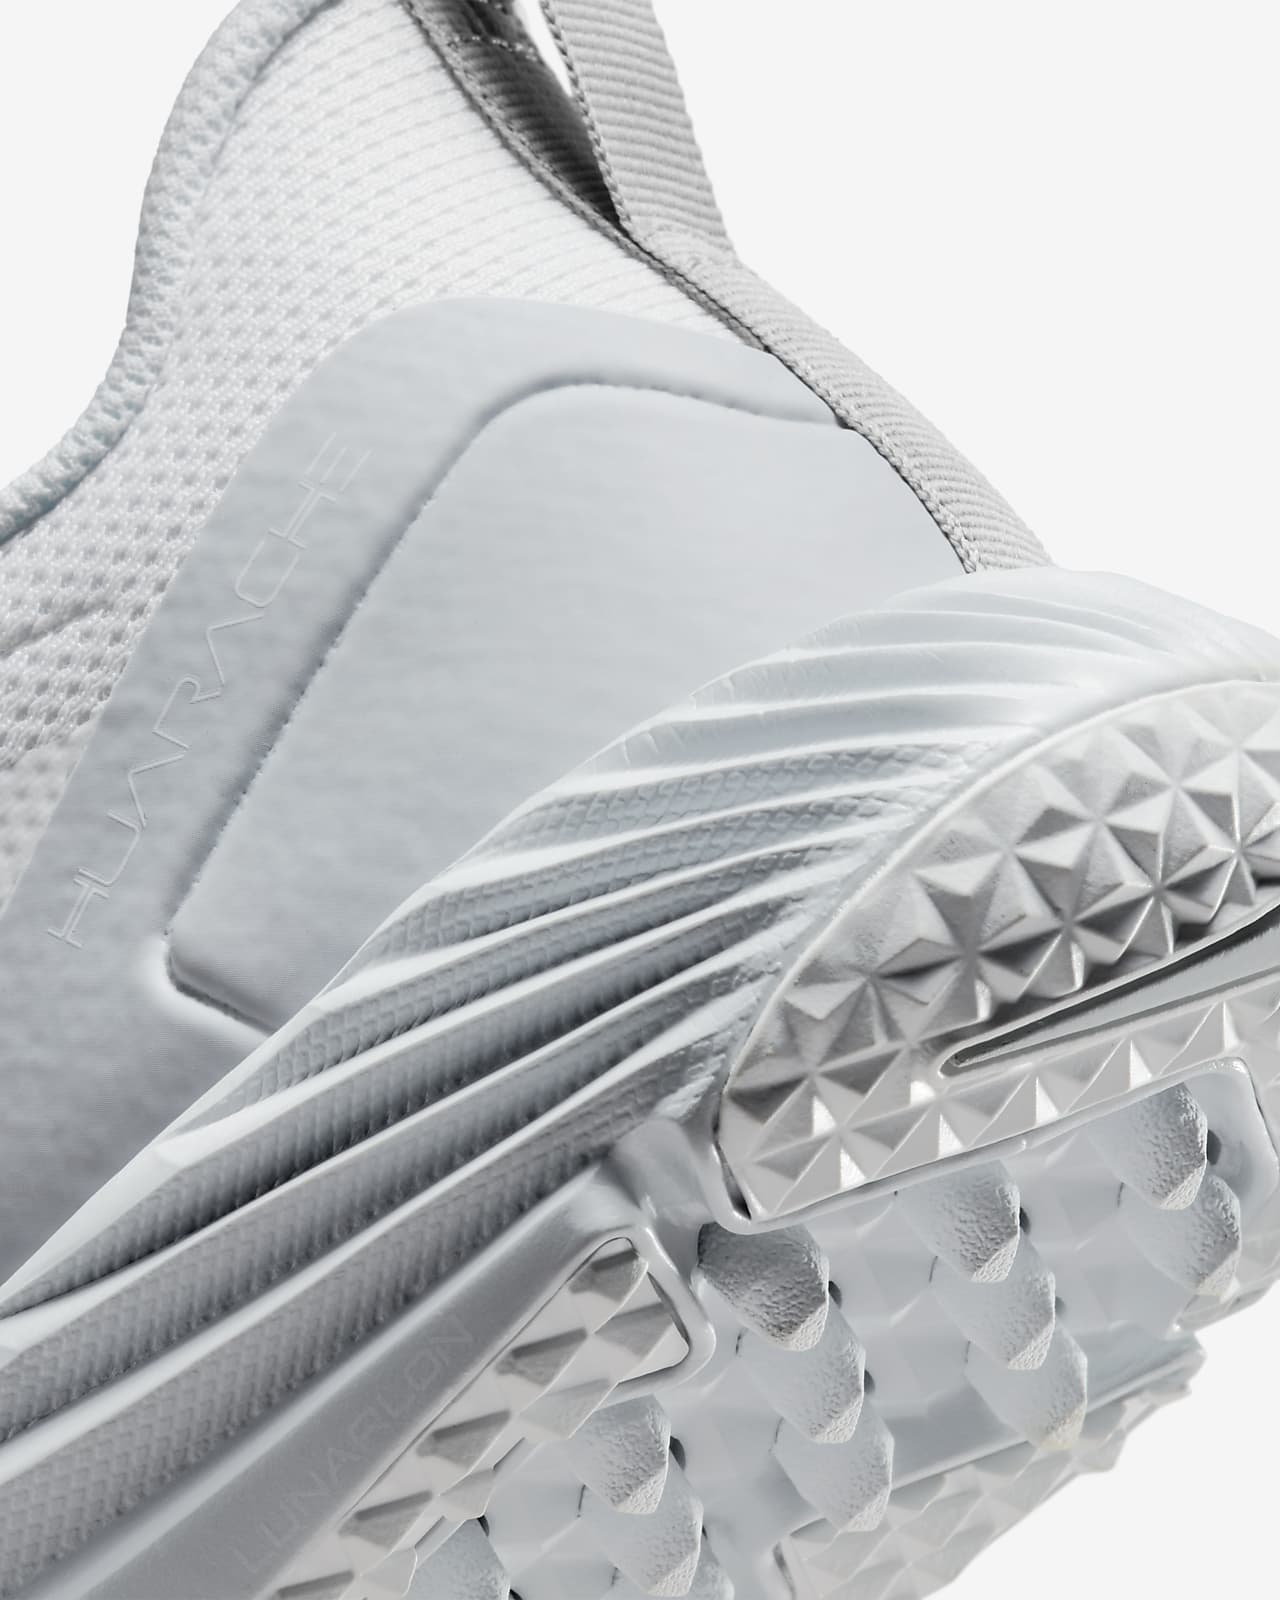 Nike Alpha Huarache 7 Pro Lacrosse Cleats Size 10.5 Wide